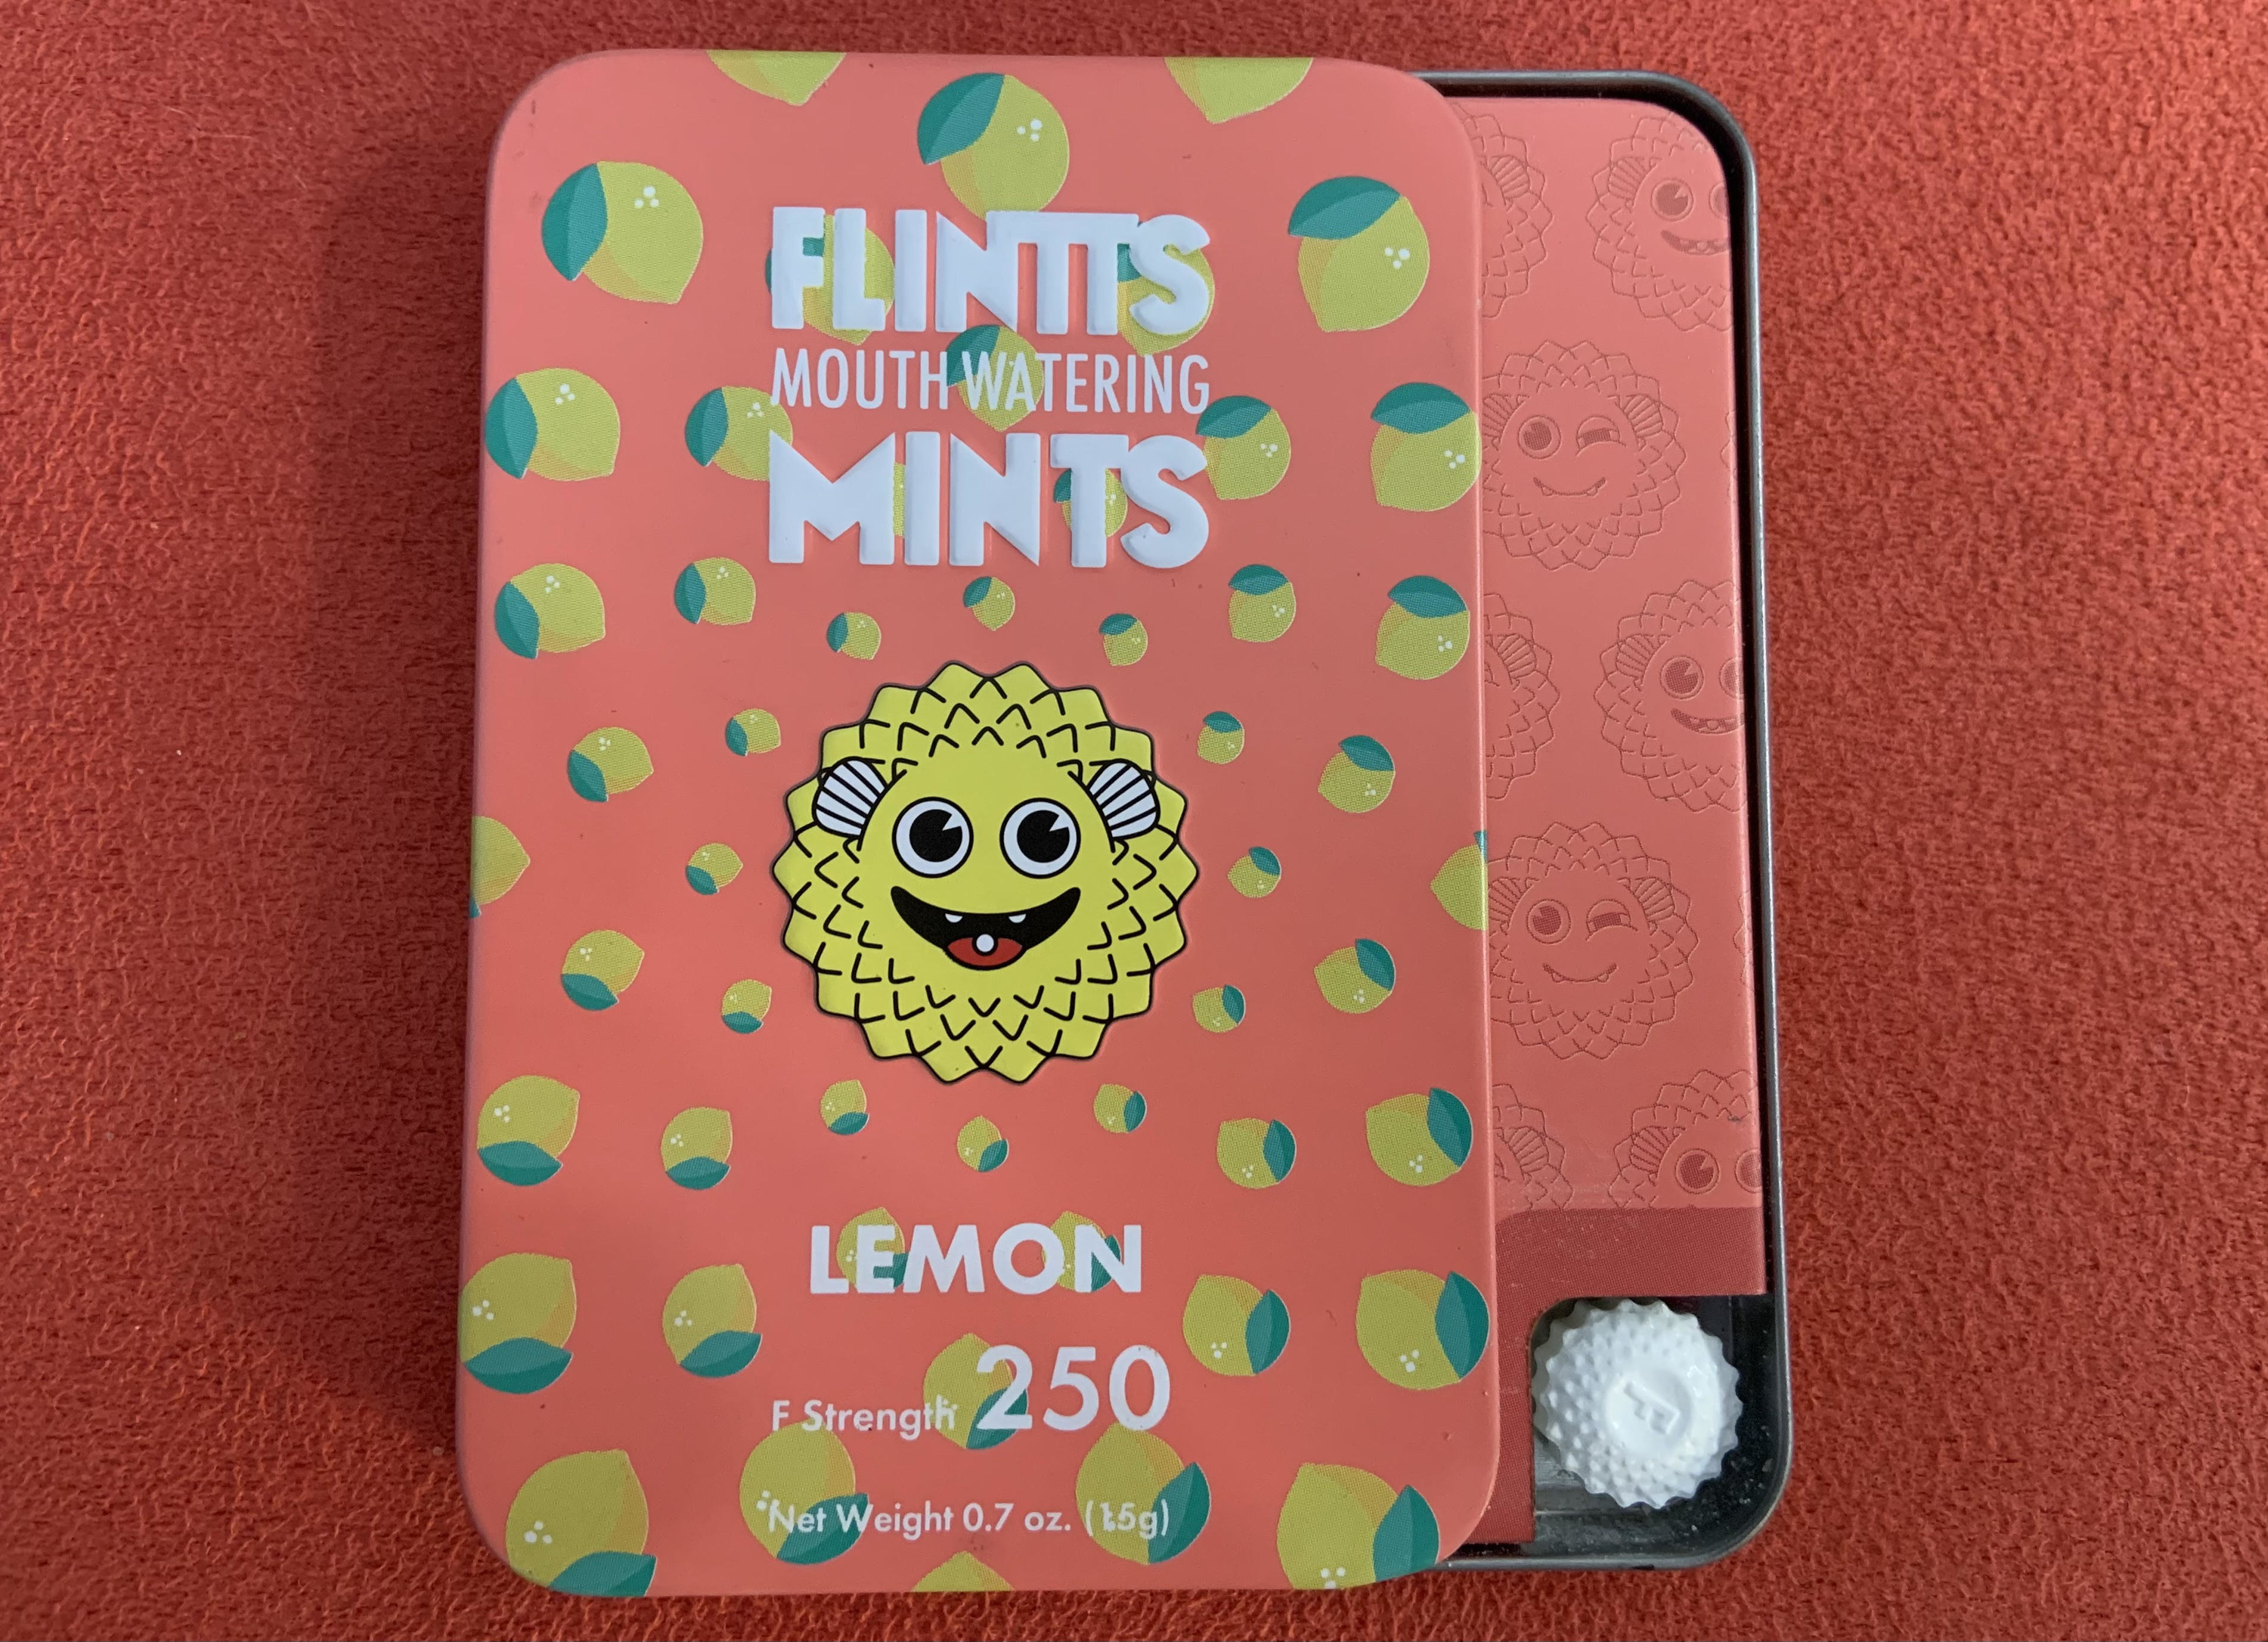 Flintts Mints Lemon F Strength 250 